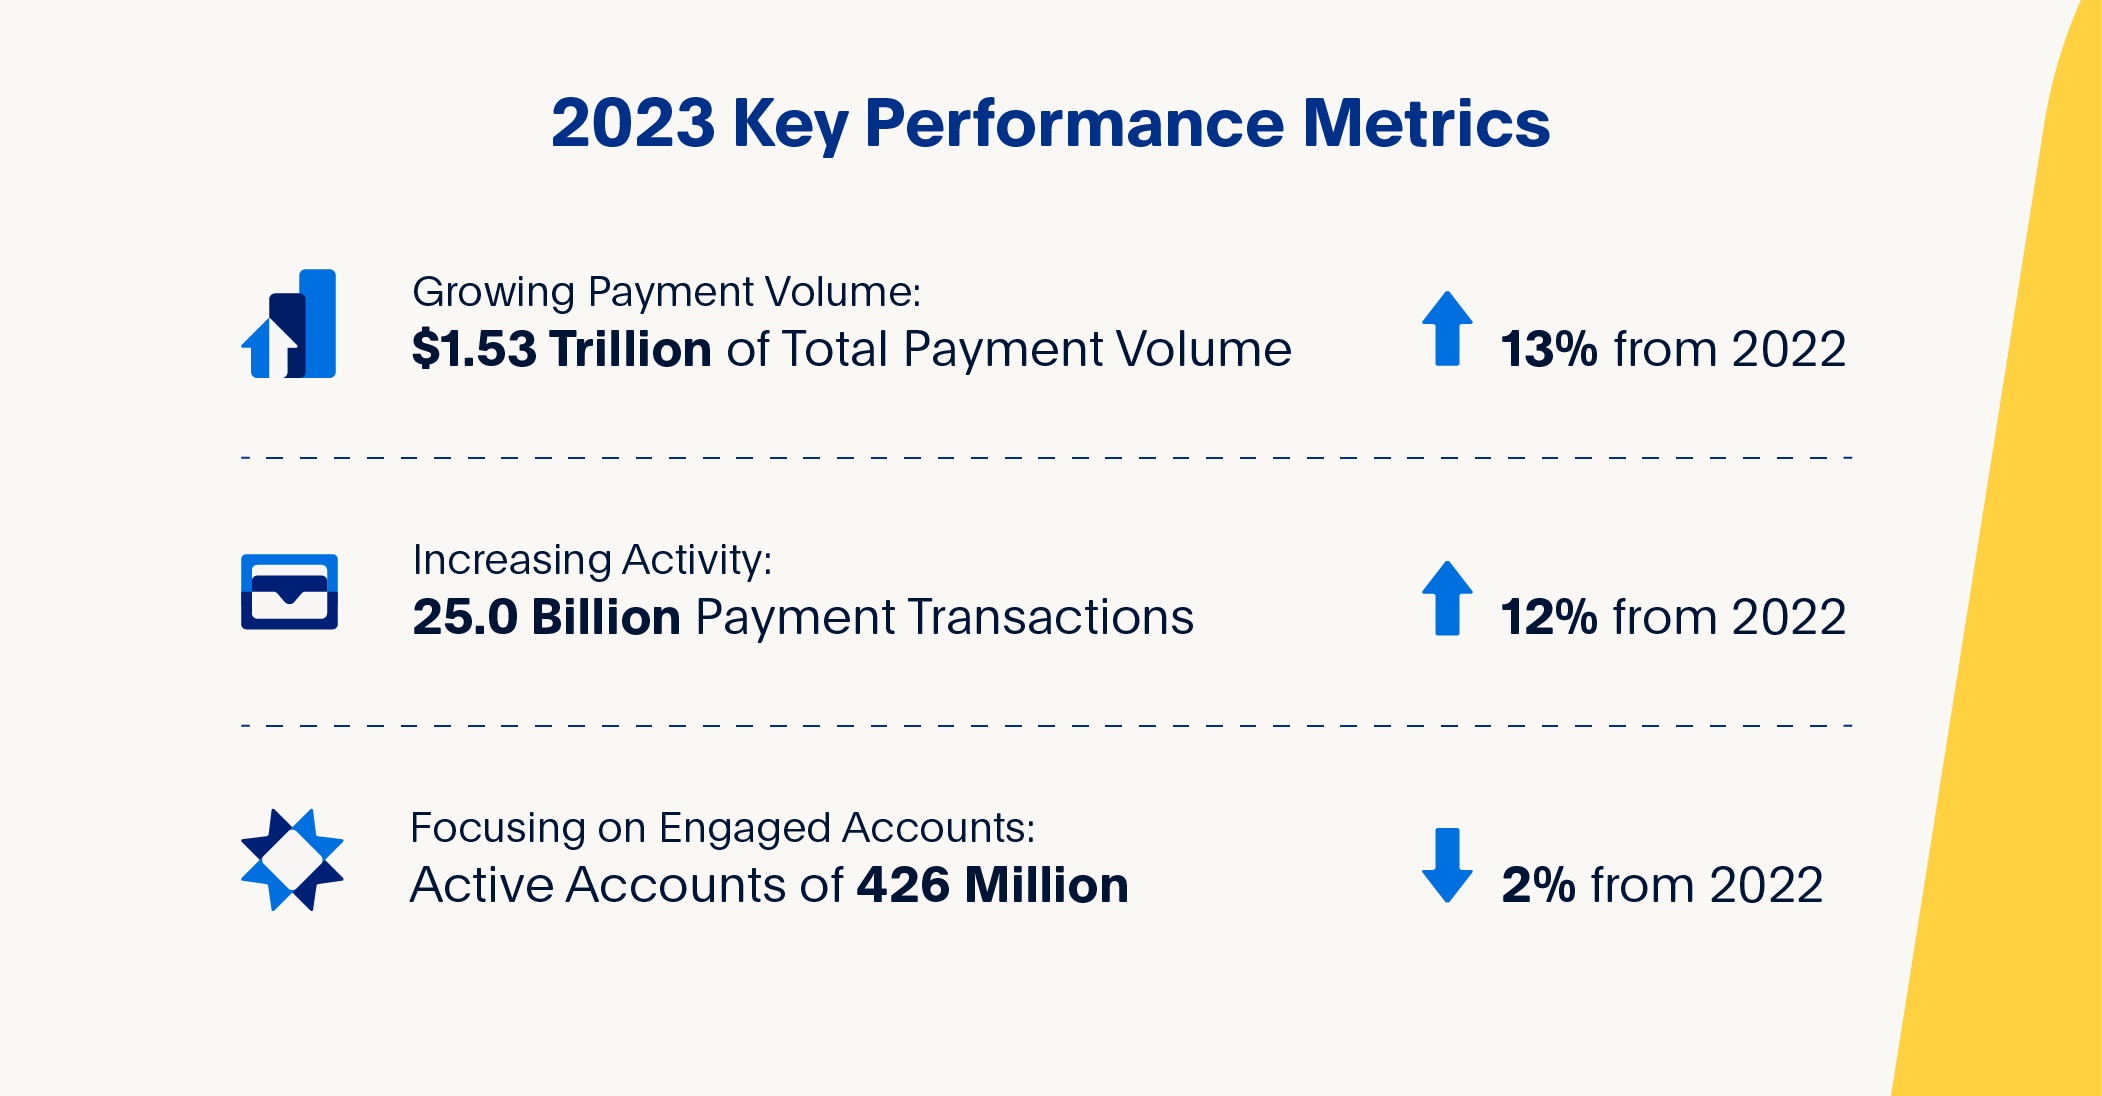 PayPal-2023 10K Graphic-Key Performance Metrics-R8.jpg